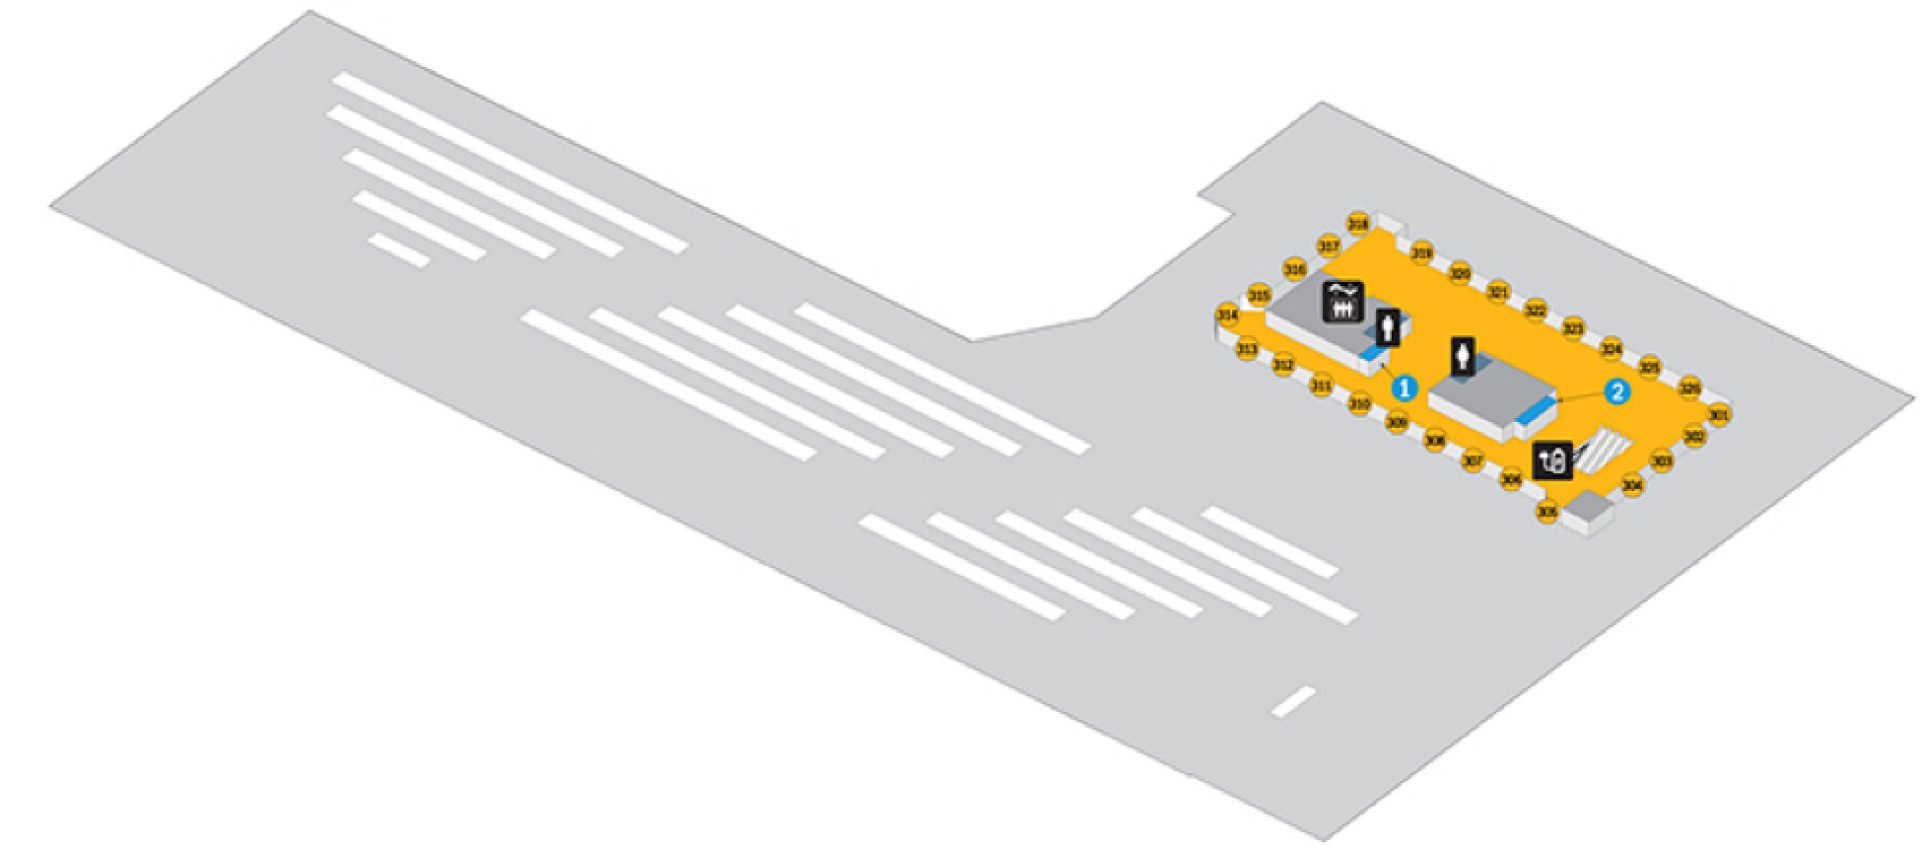 Port Authority Bus Terminal Interior Map - Level 3